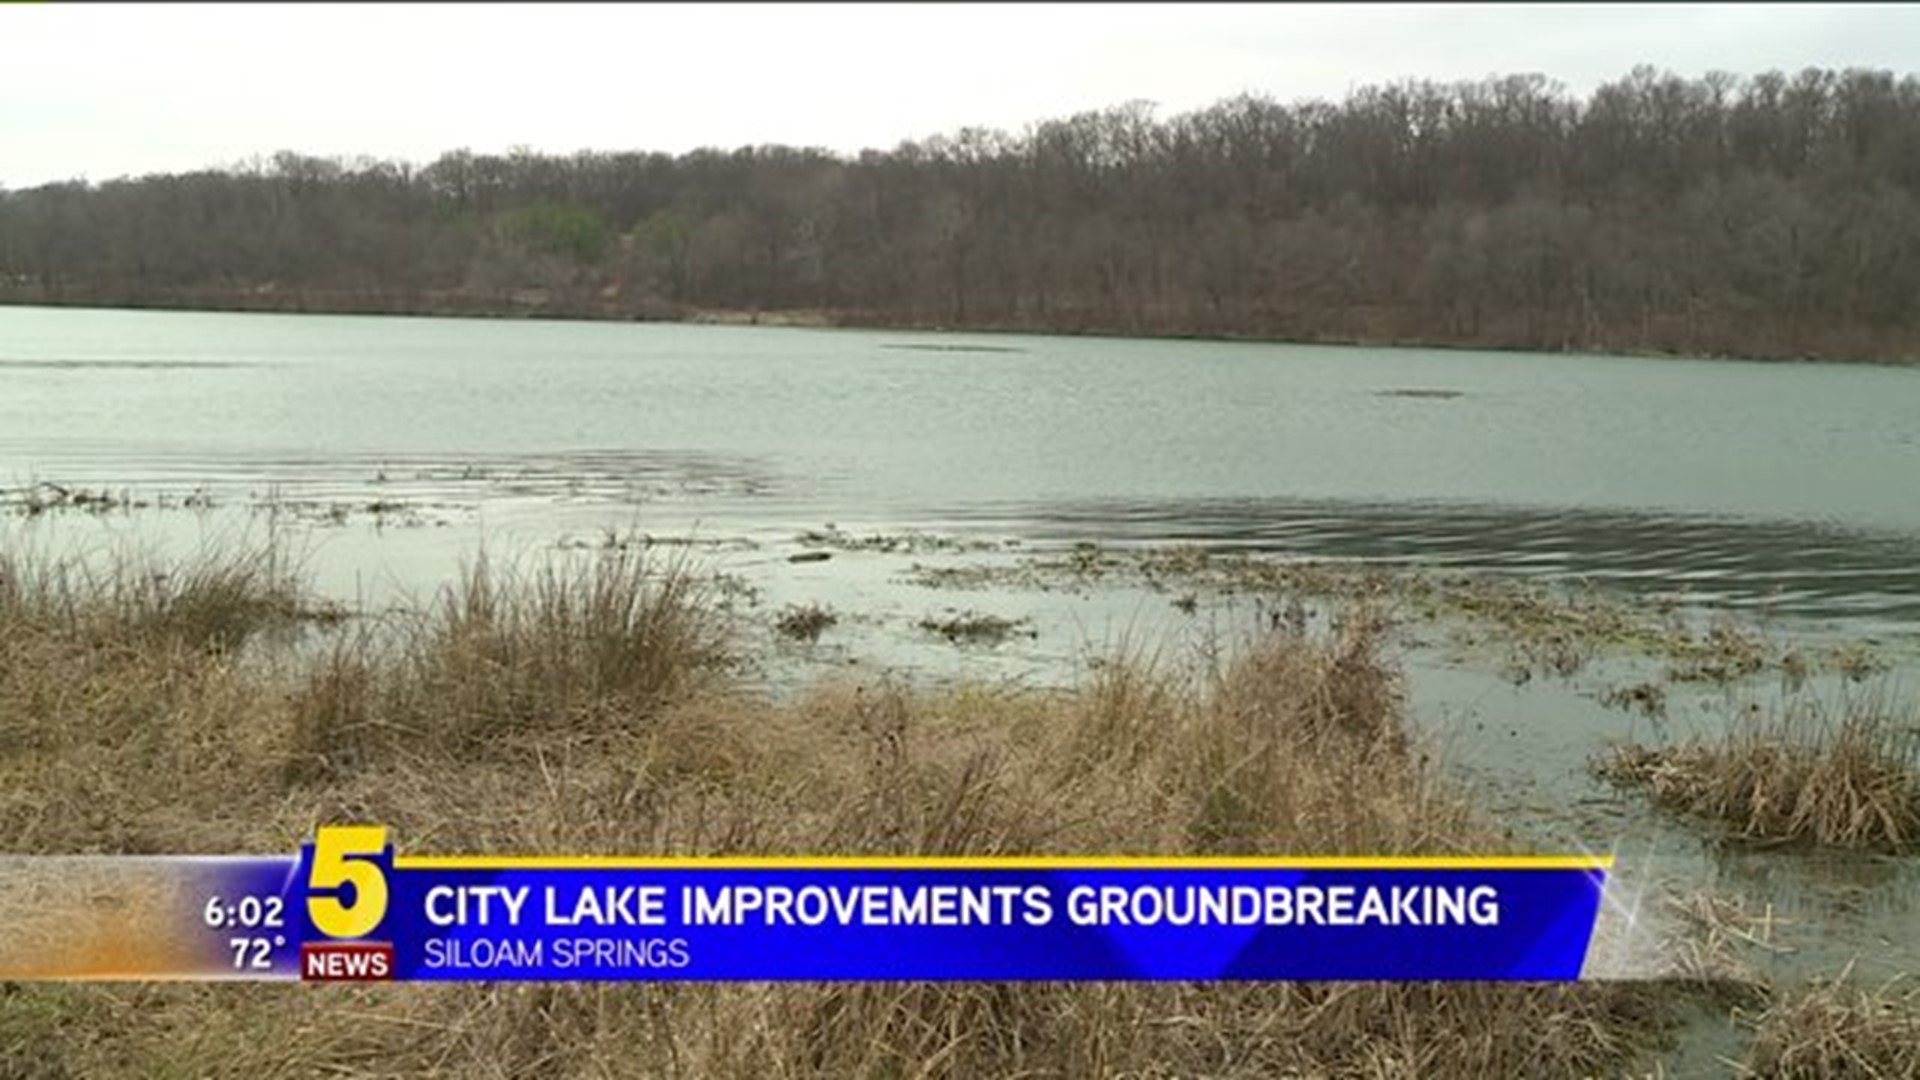 City Lake Improvements Groundbreaking